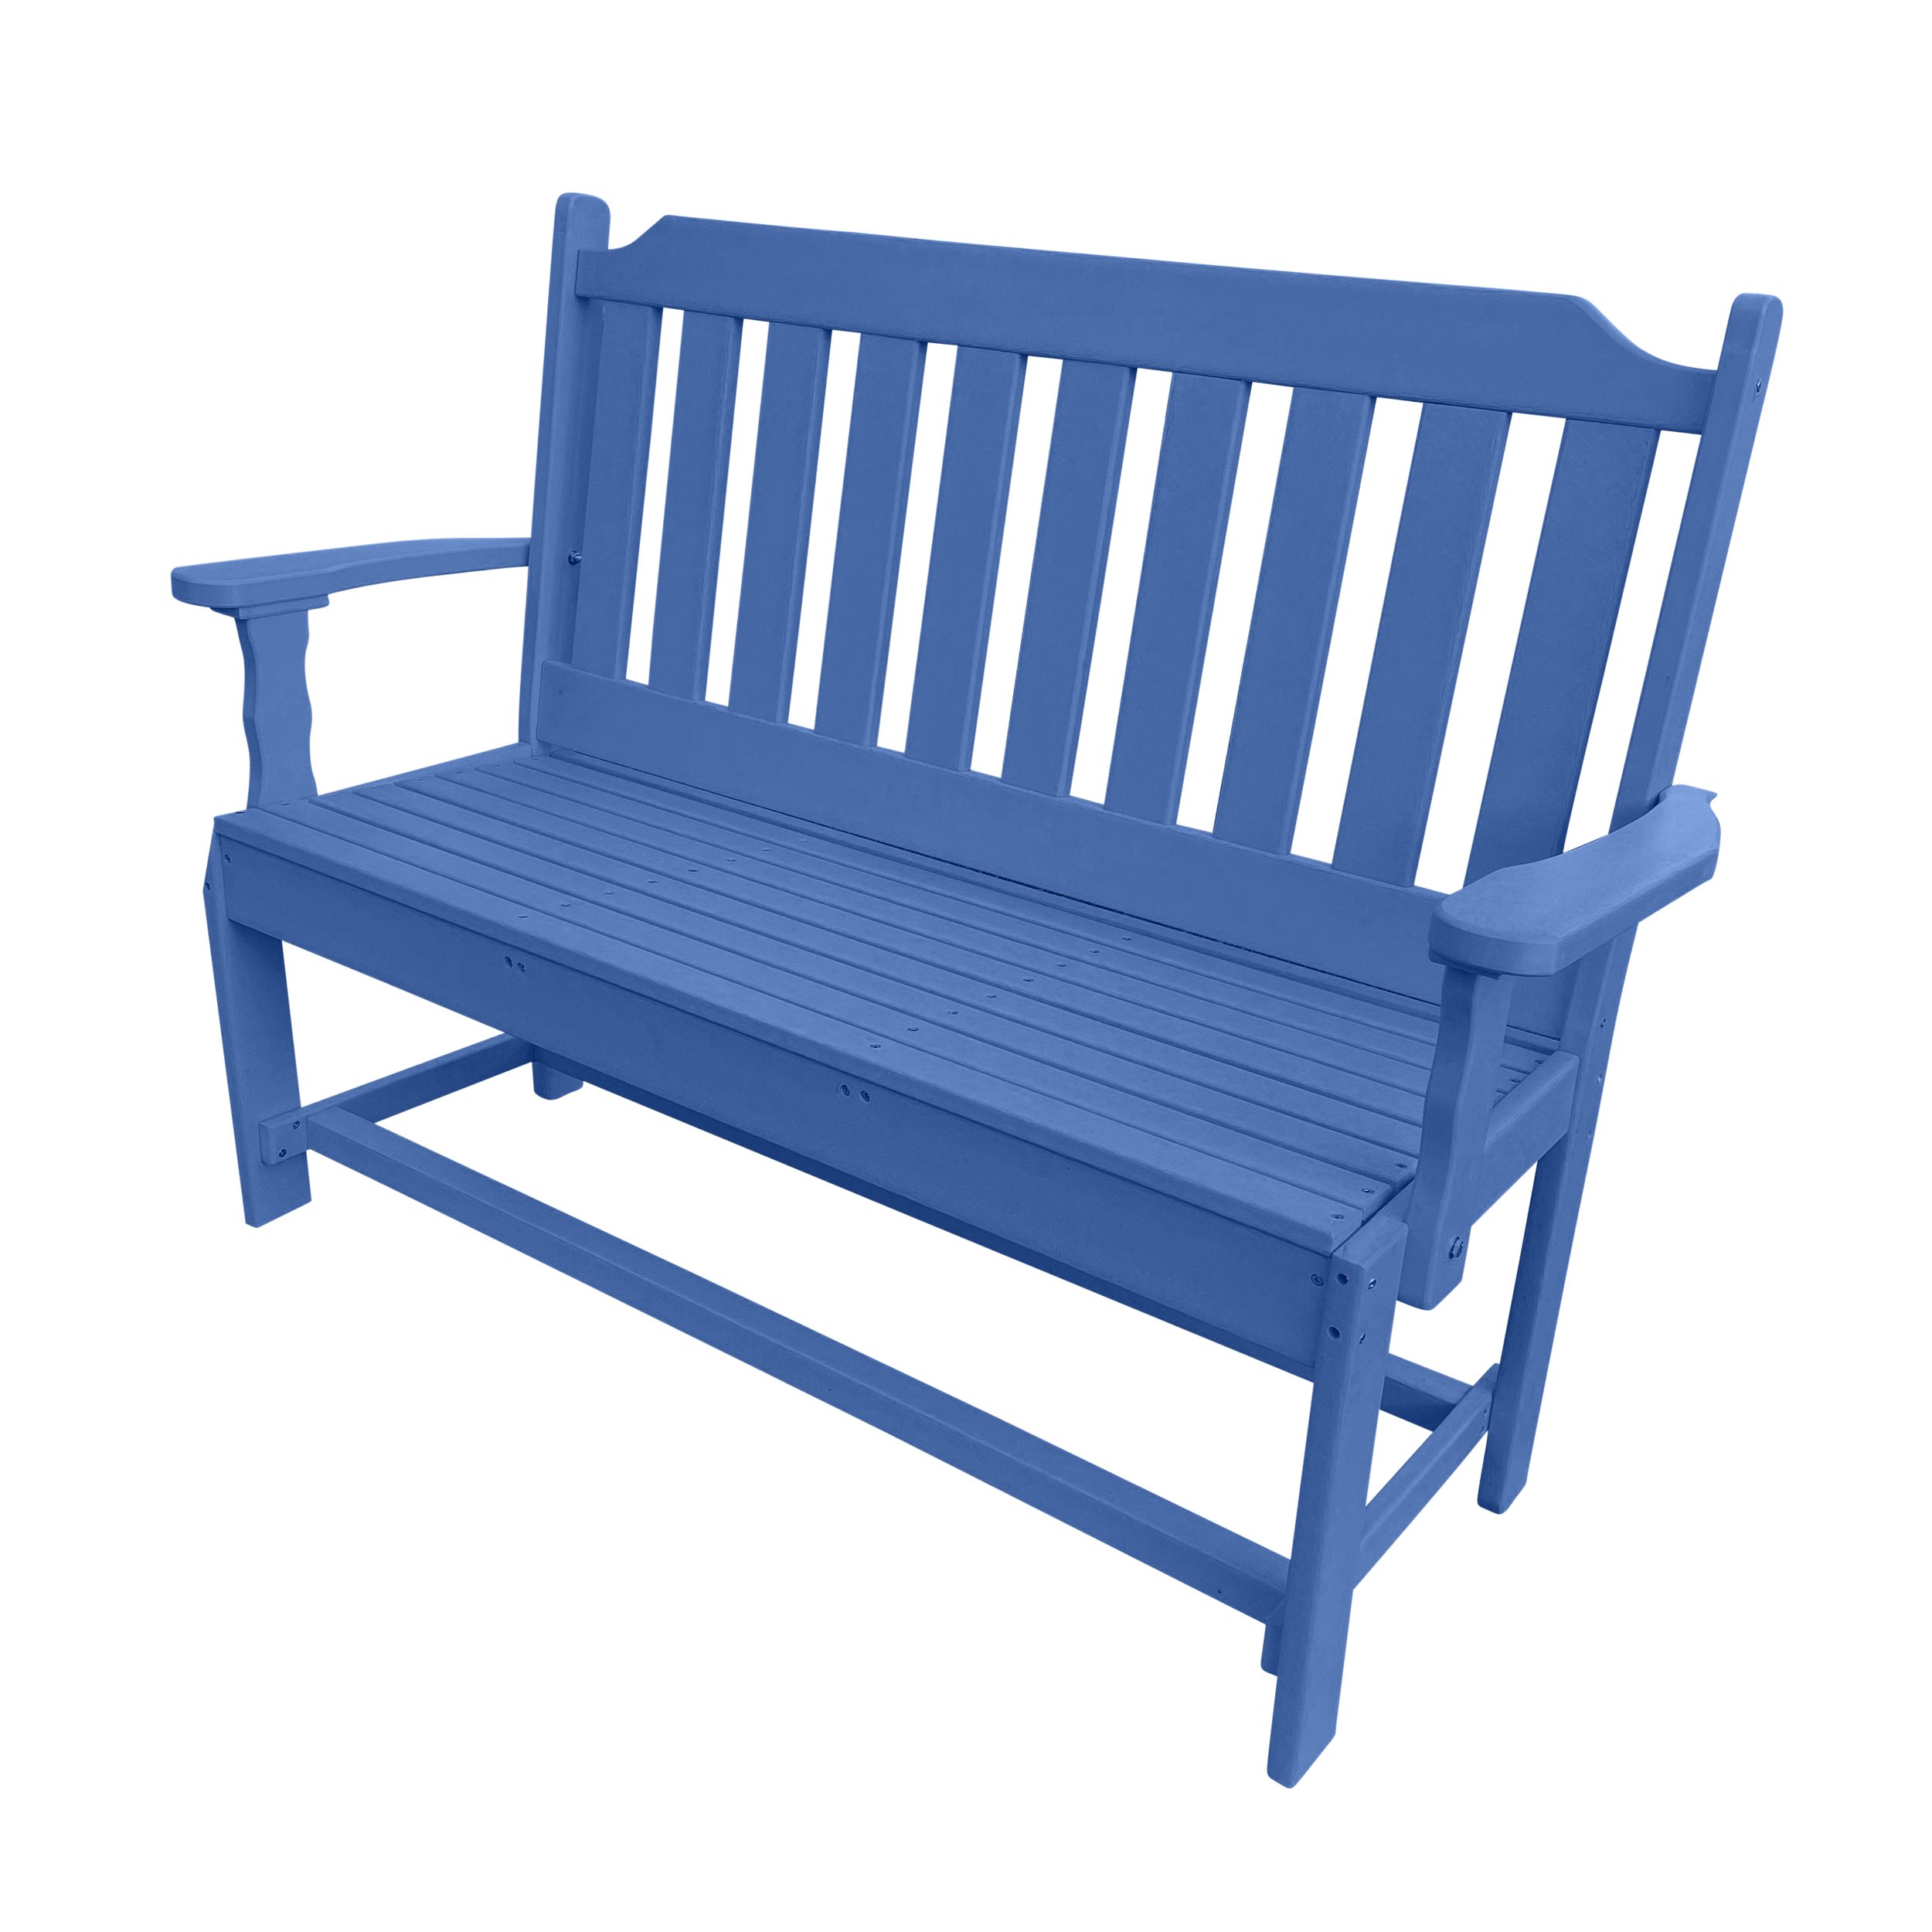 Garden bench | Burns Blue.jpg